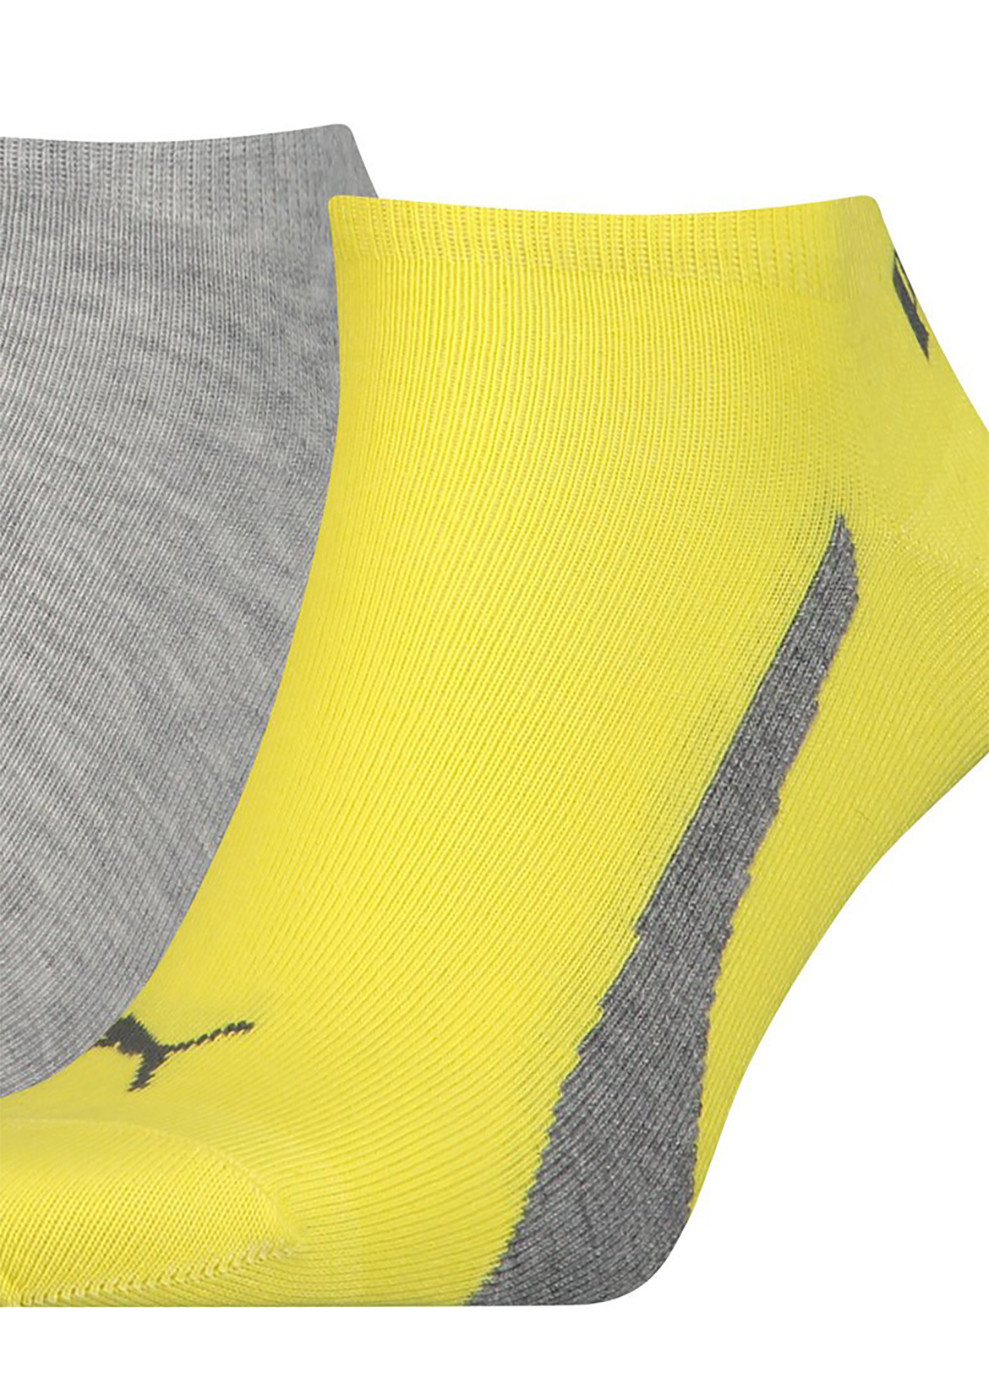 Носки Unisex Lifestyle Sneakers 3-pack gray/yellow Puma (260793787)